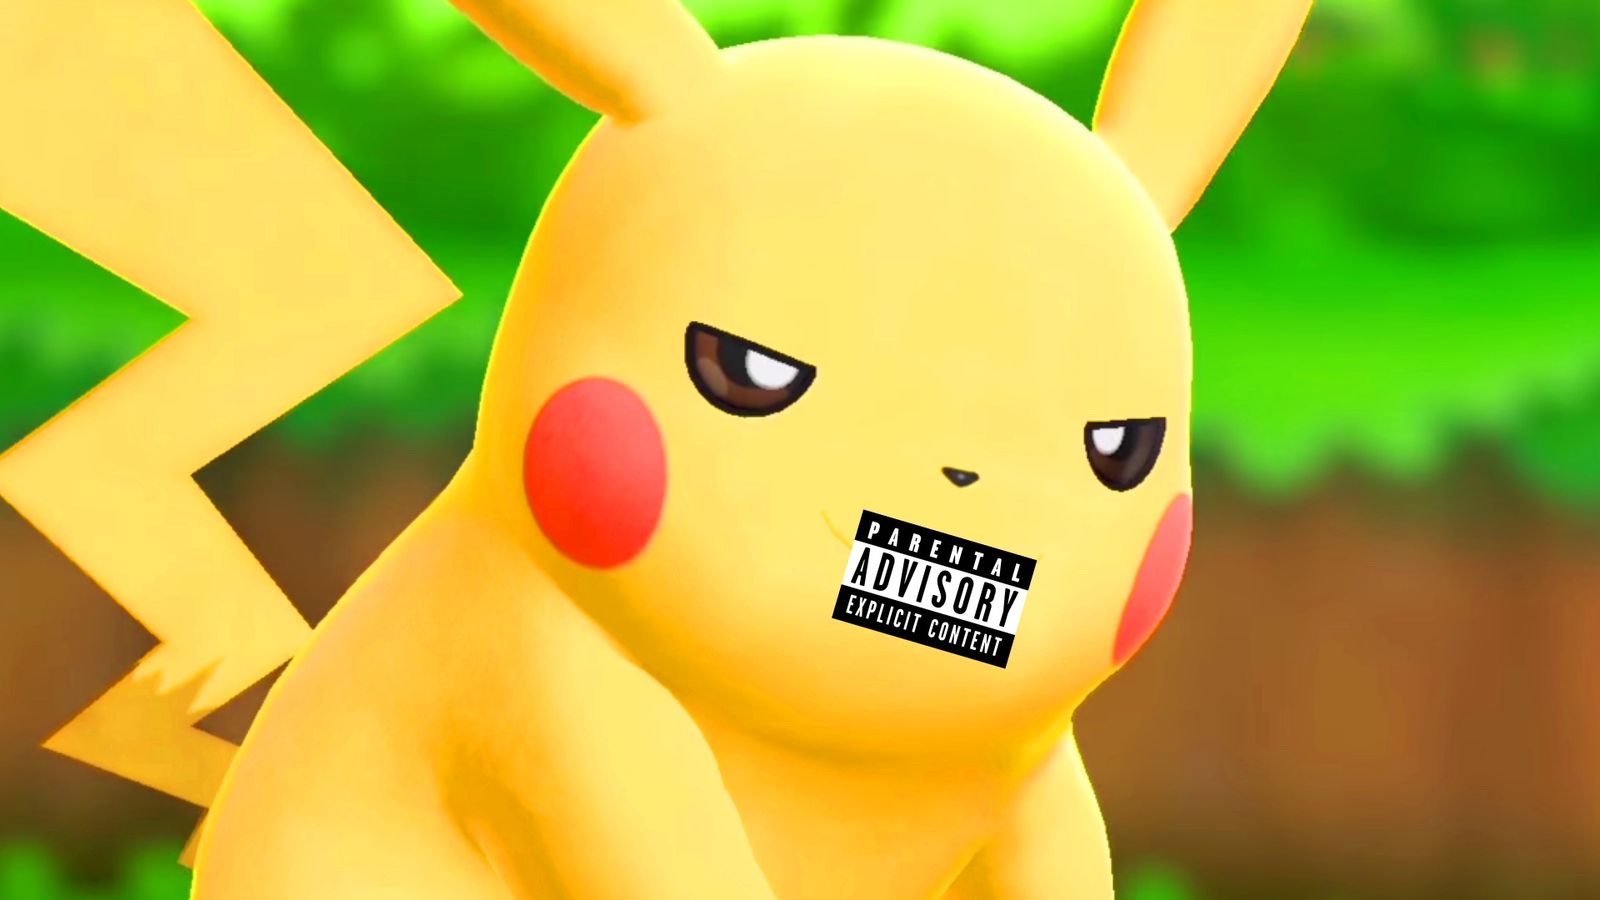 Pokémon TikTok featuring pikachu swearing let’s go explicit logo